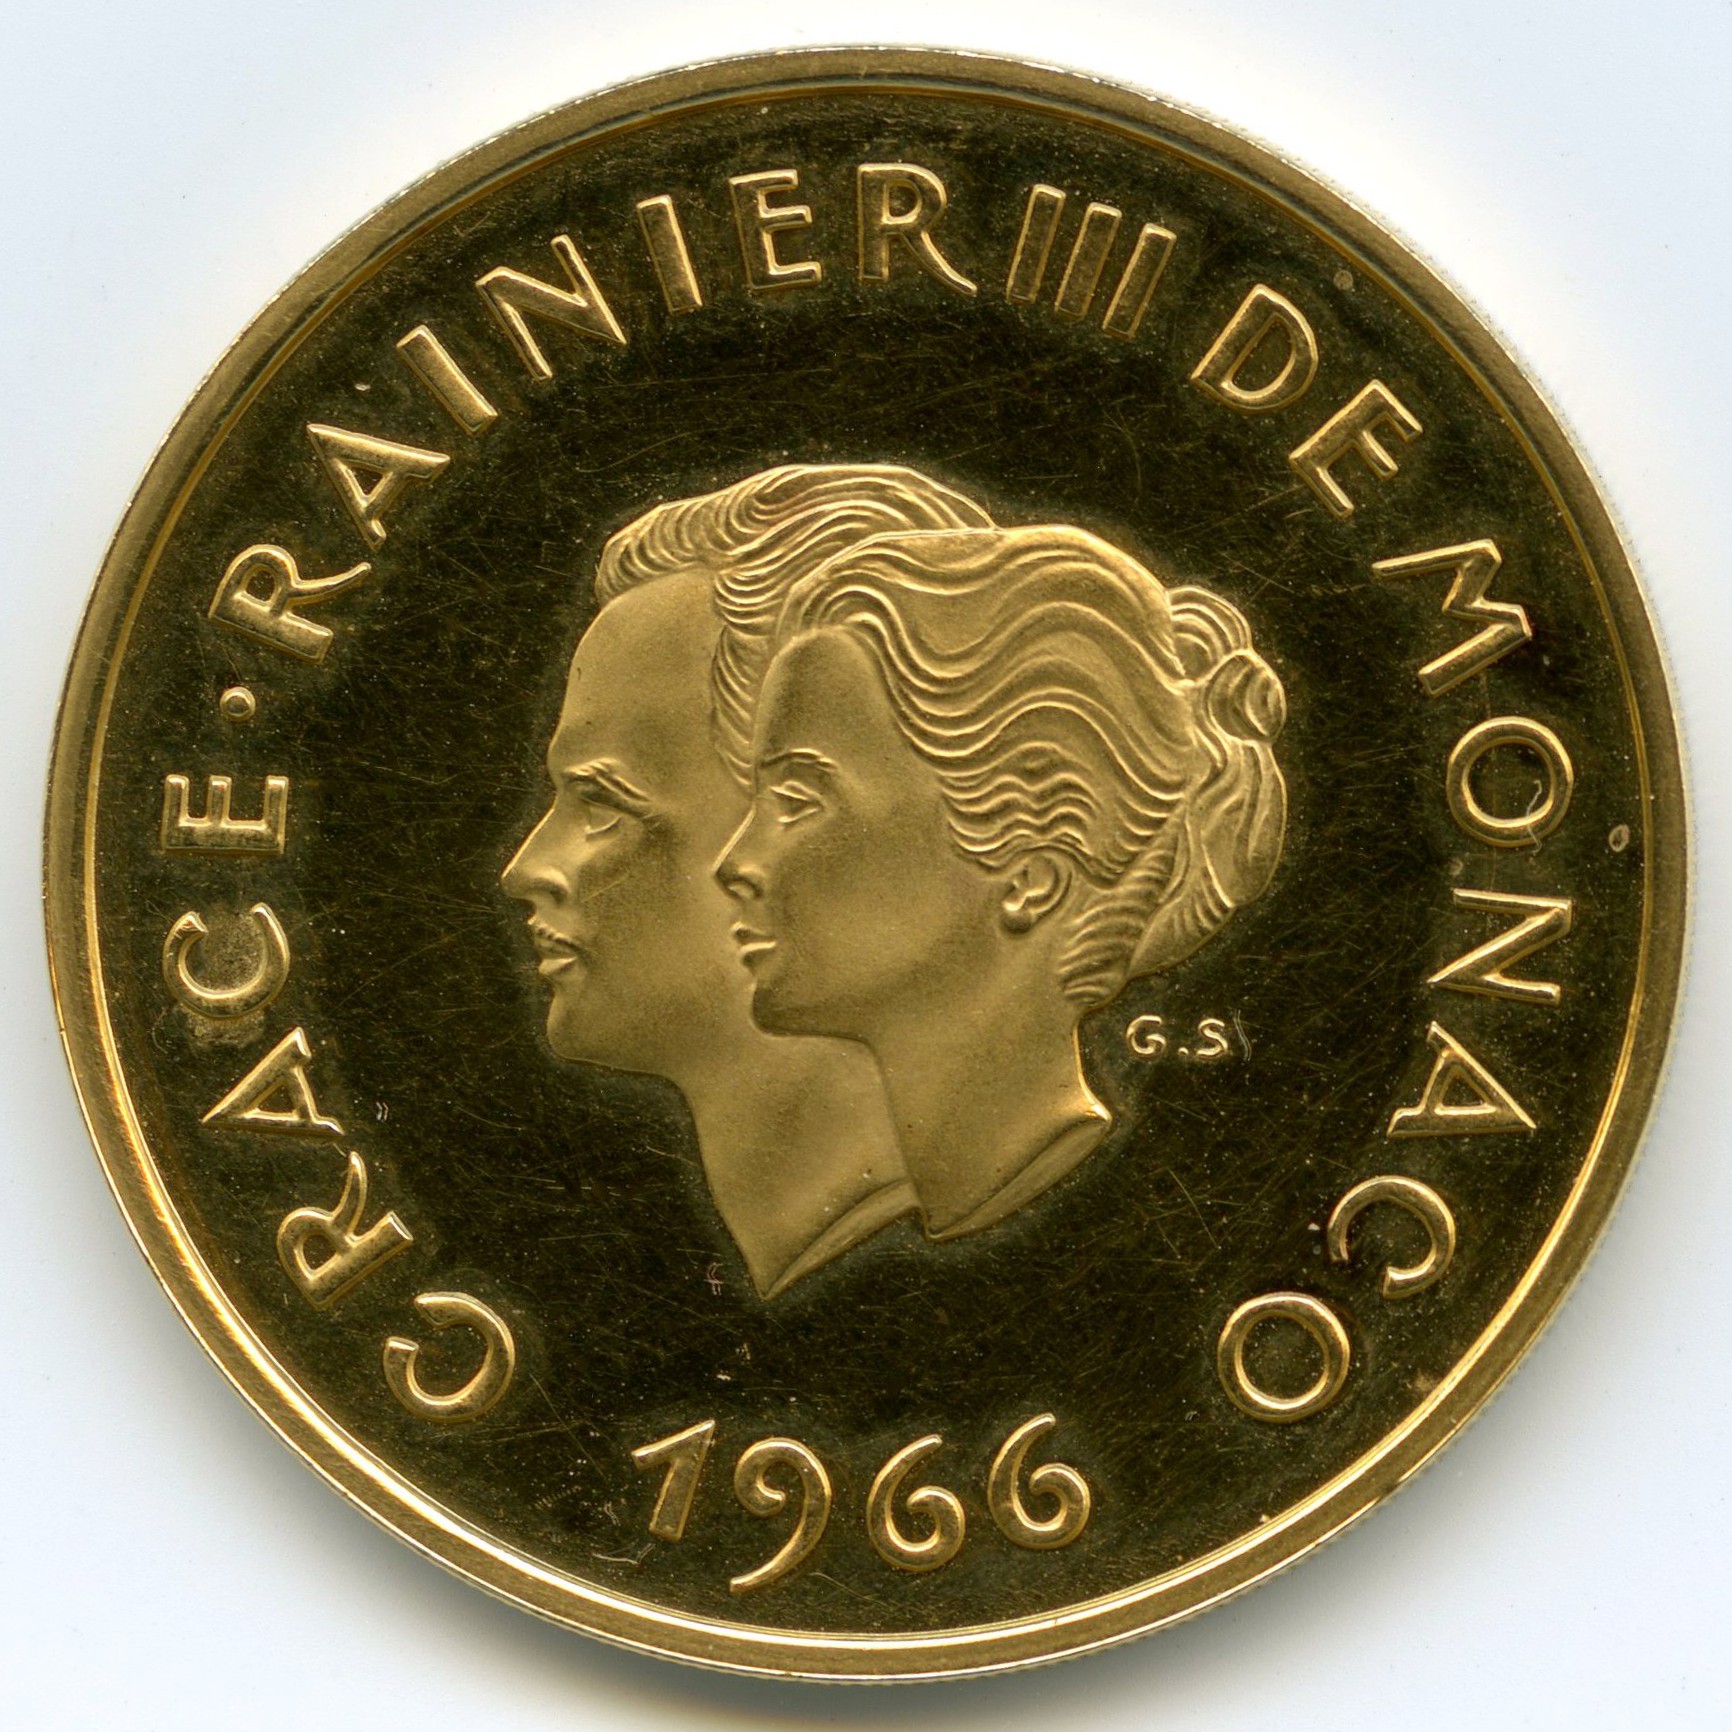 Monaco - 200 Francs - 1966 avers